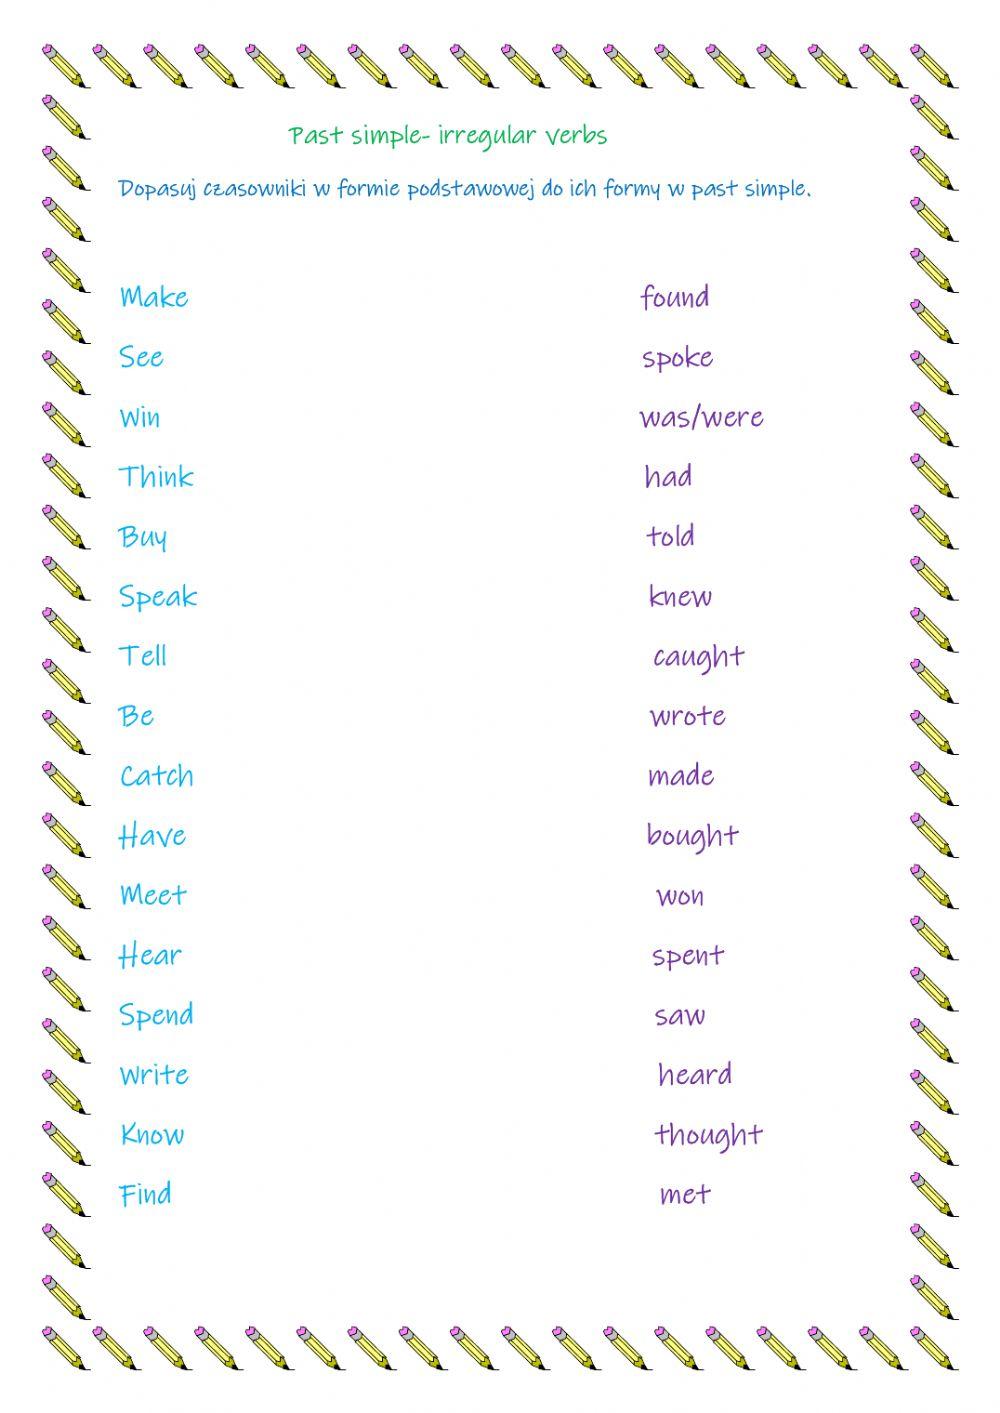 Past simple-irregular verbs